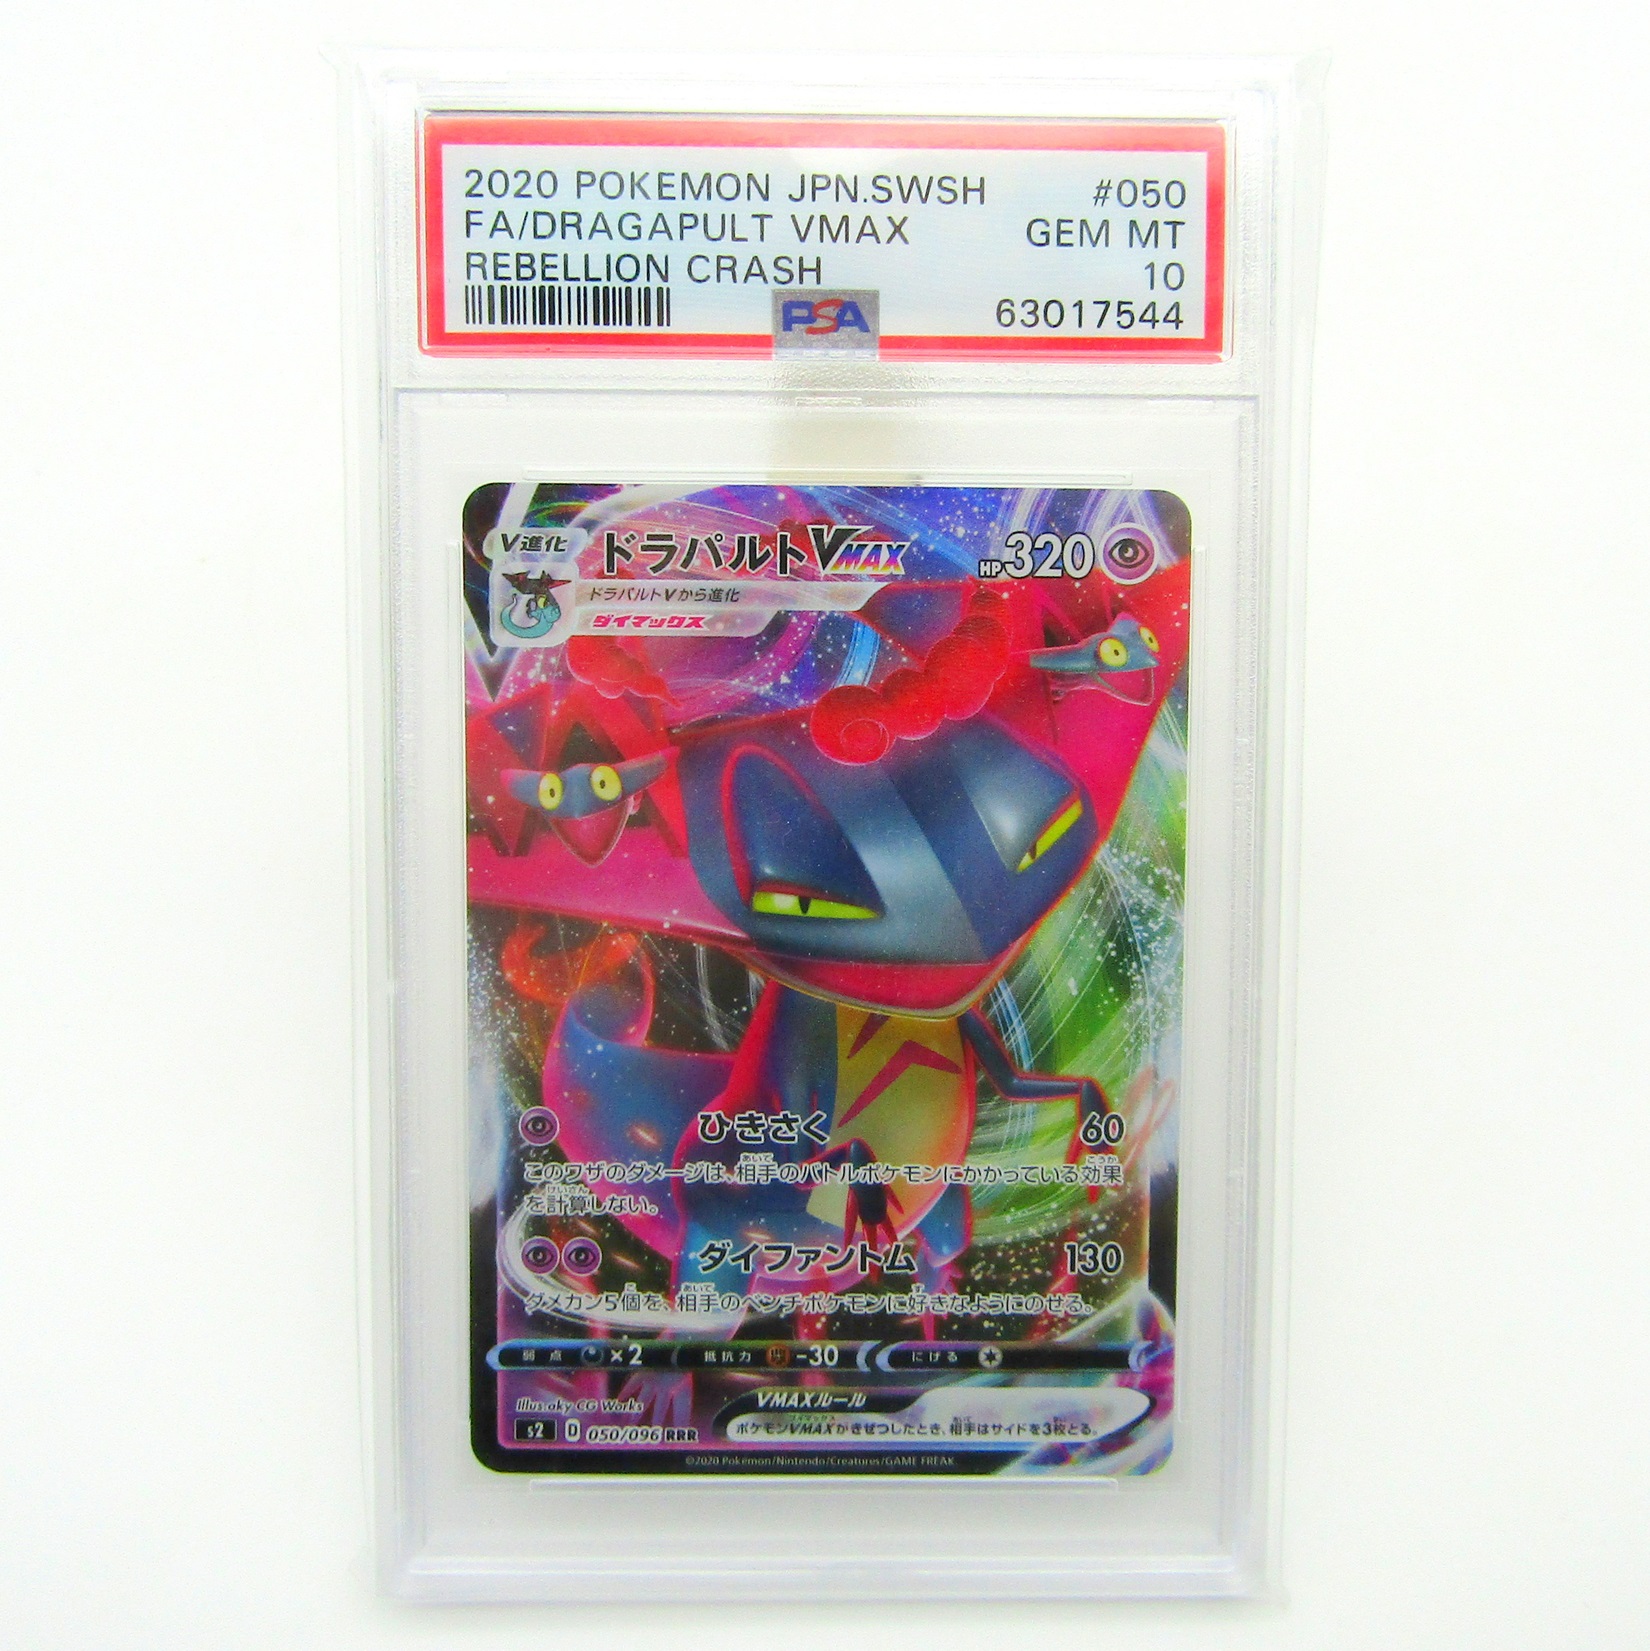 Pokémon Card. 2020. JPN. Rebellion Crash. FA Dragapult VMAX. s2 050/096 PSA 10